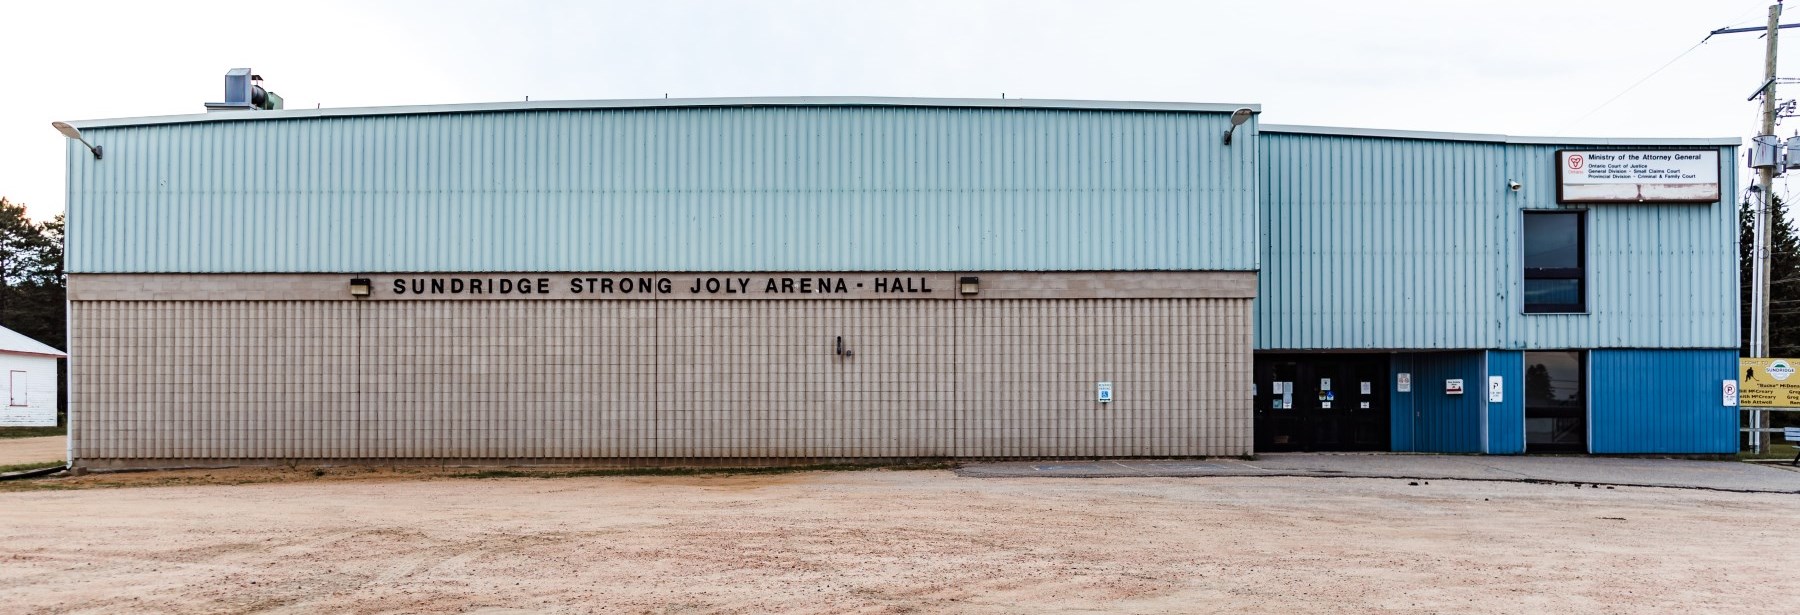 SSJ Arena building